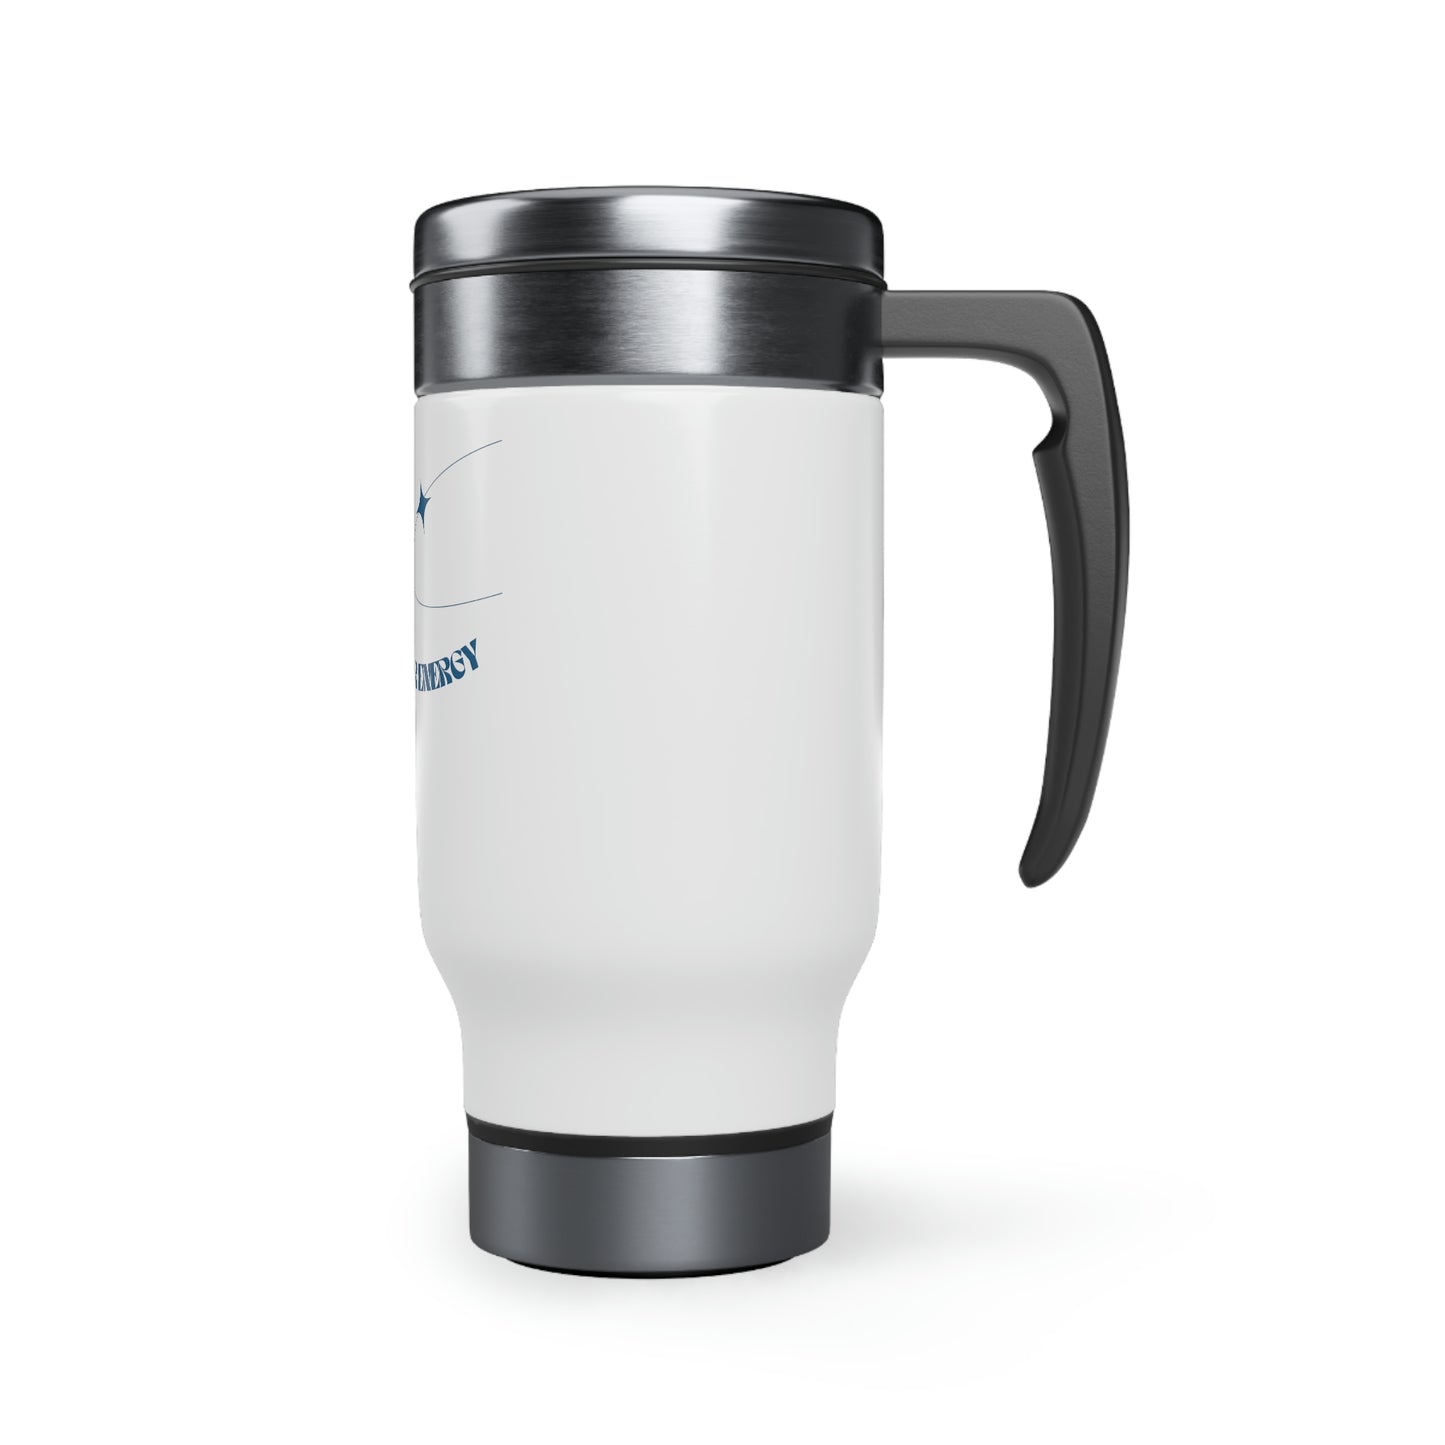 Blue Protect Your Energy Travel Mug with Handle, 14oz